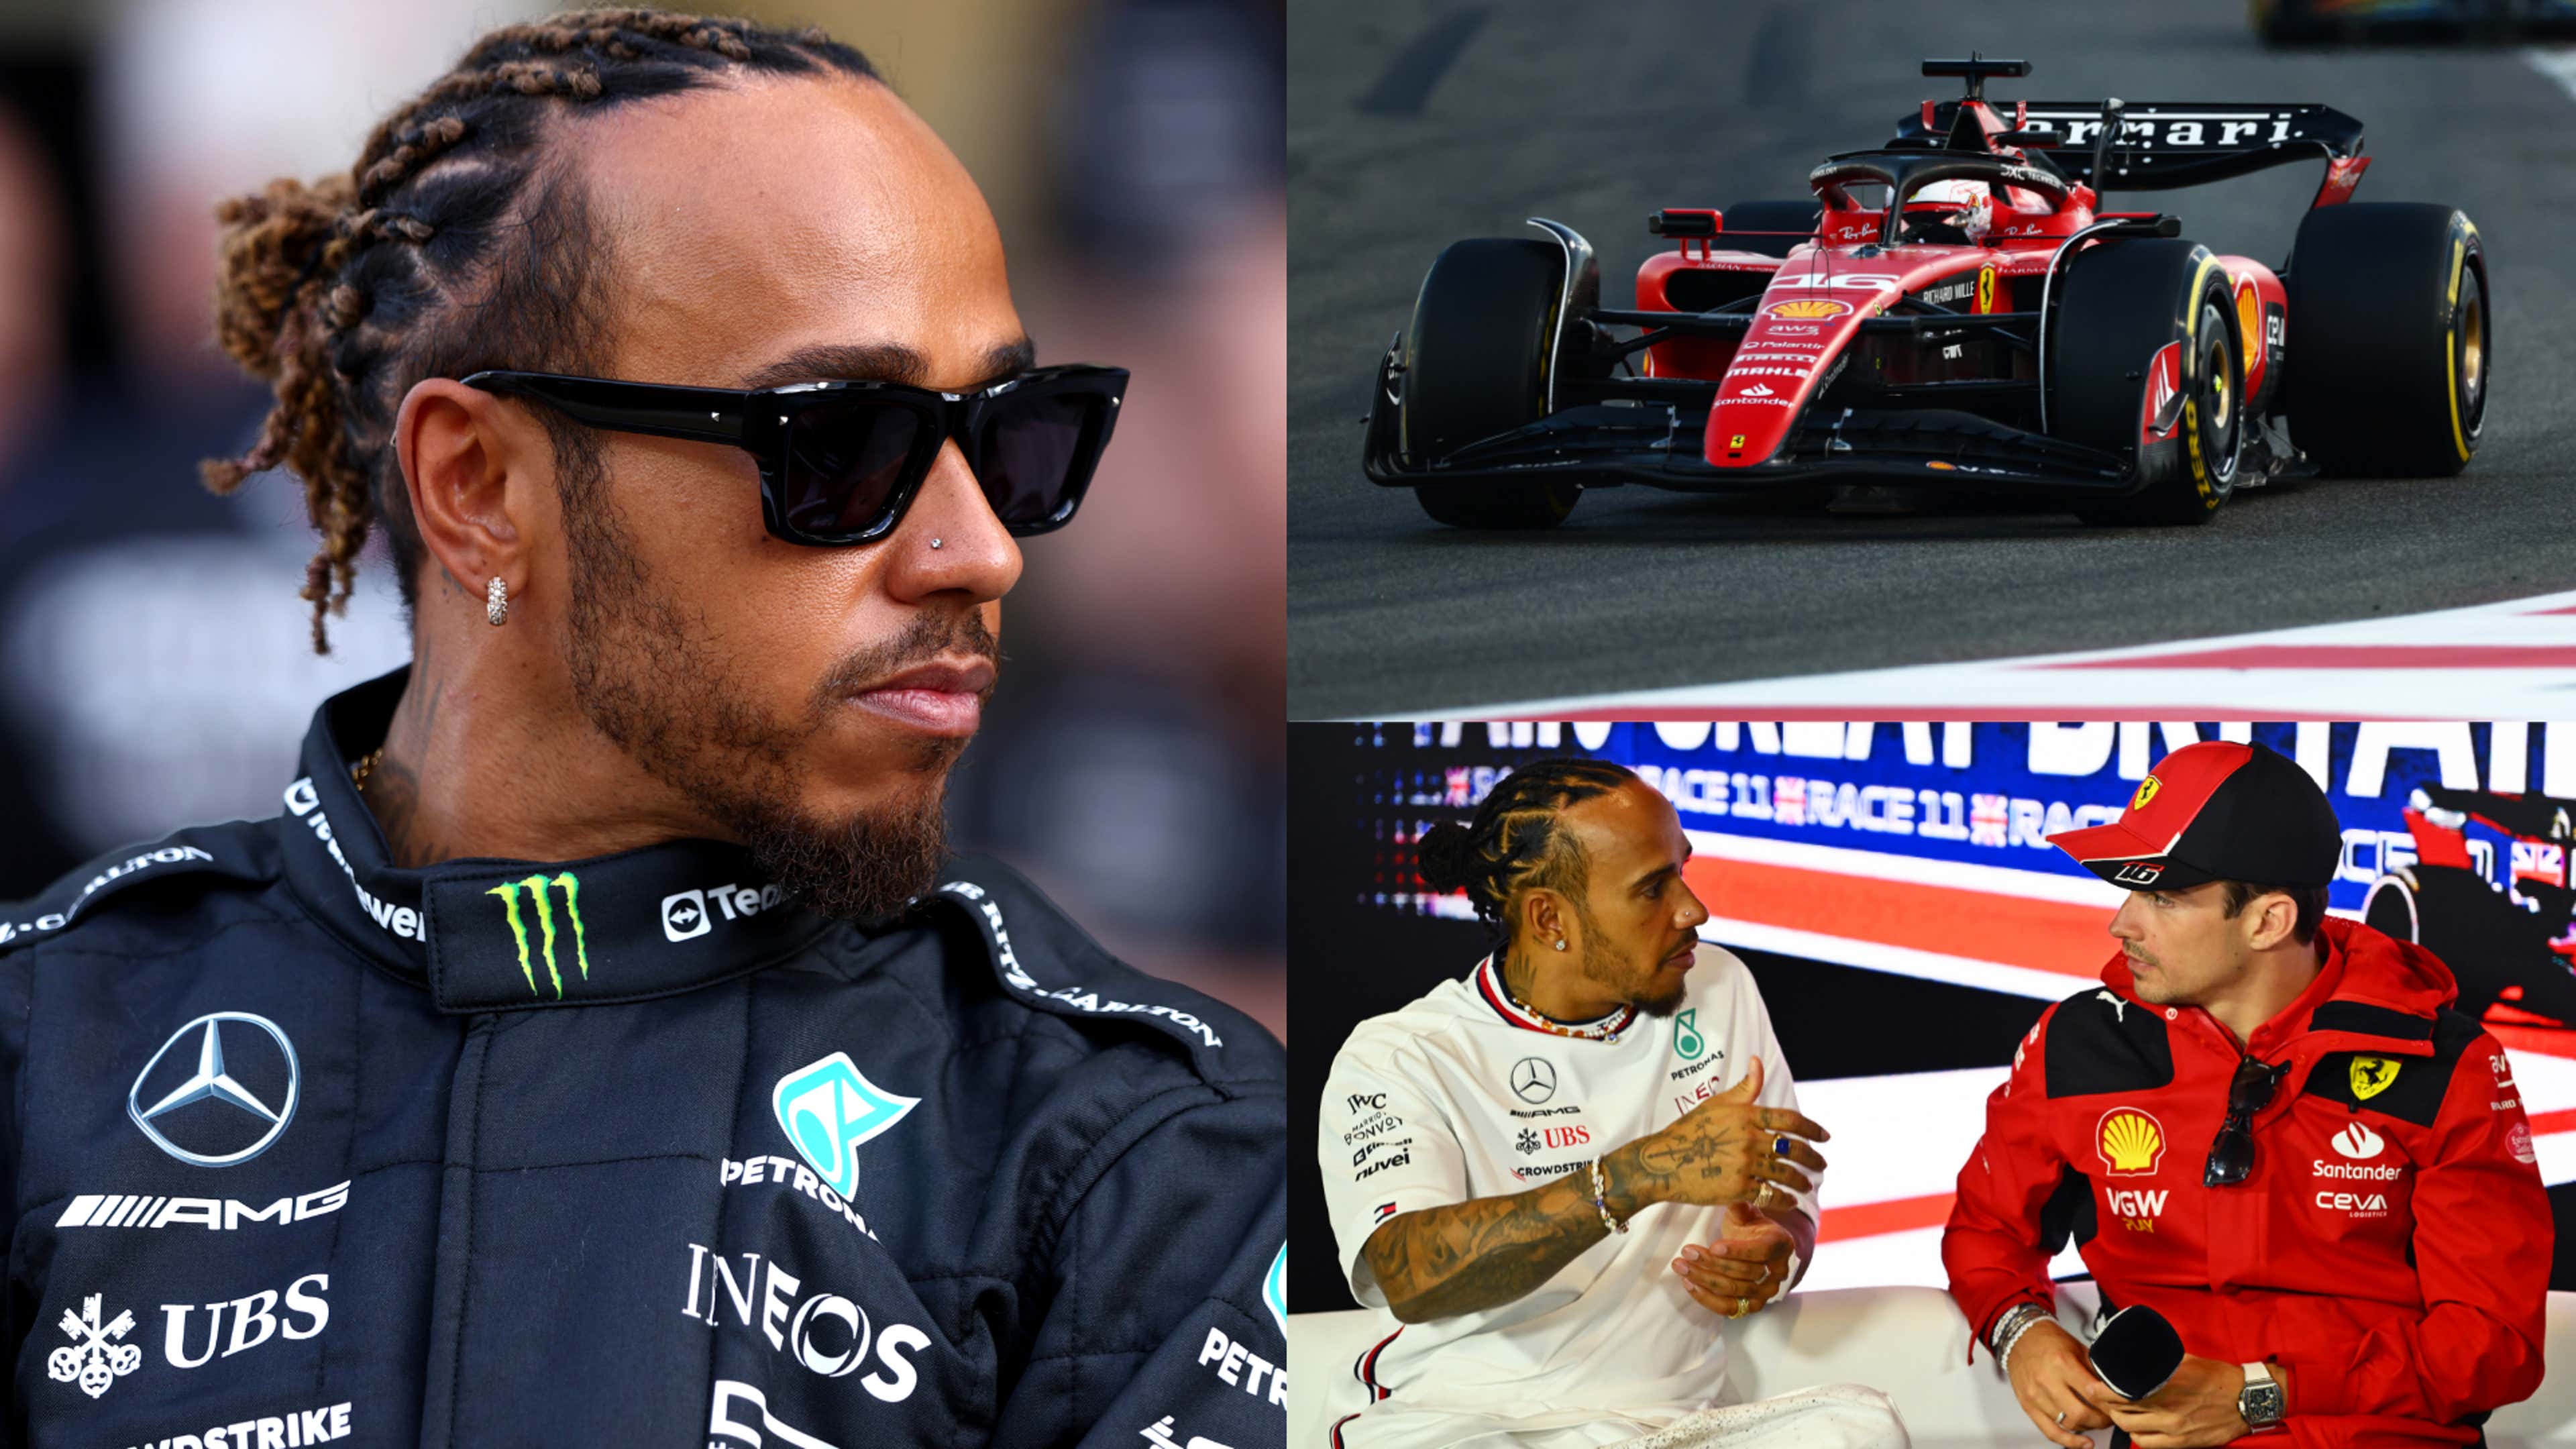 Biggest deadline day transfer! F1 star Lewis Hamilton steals